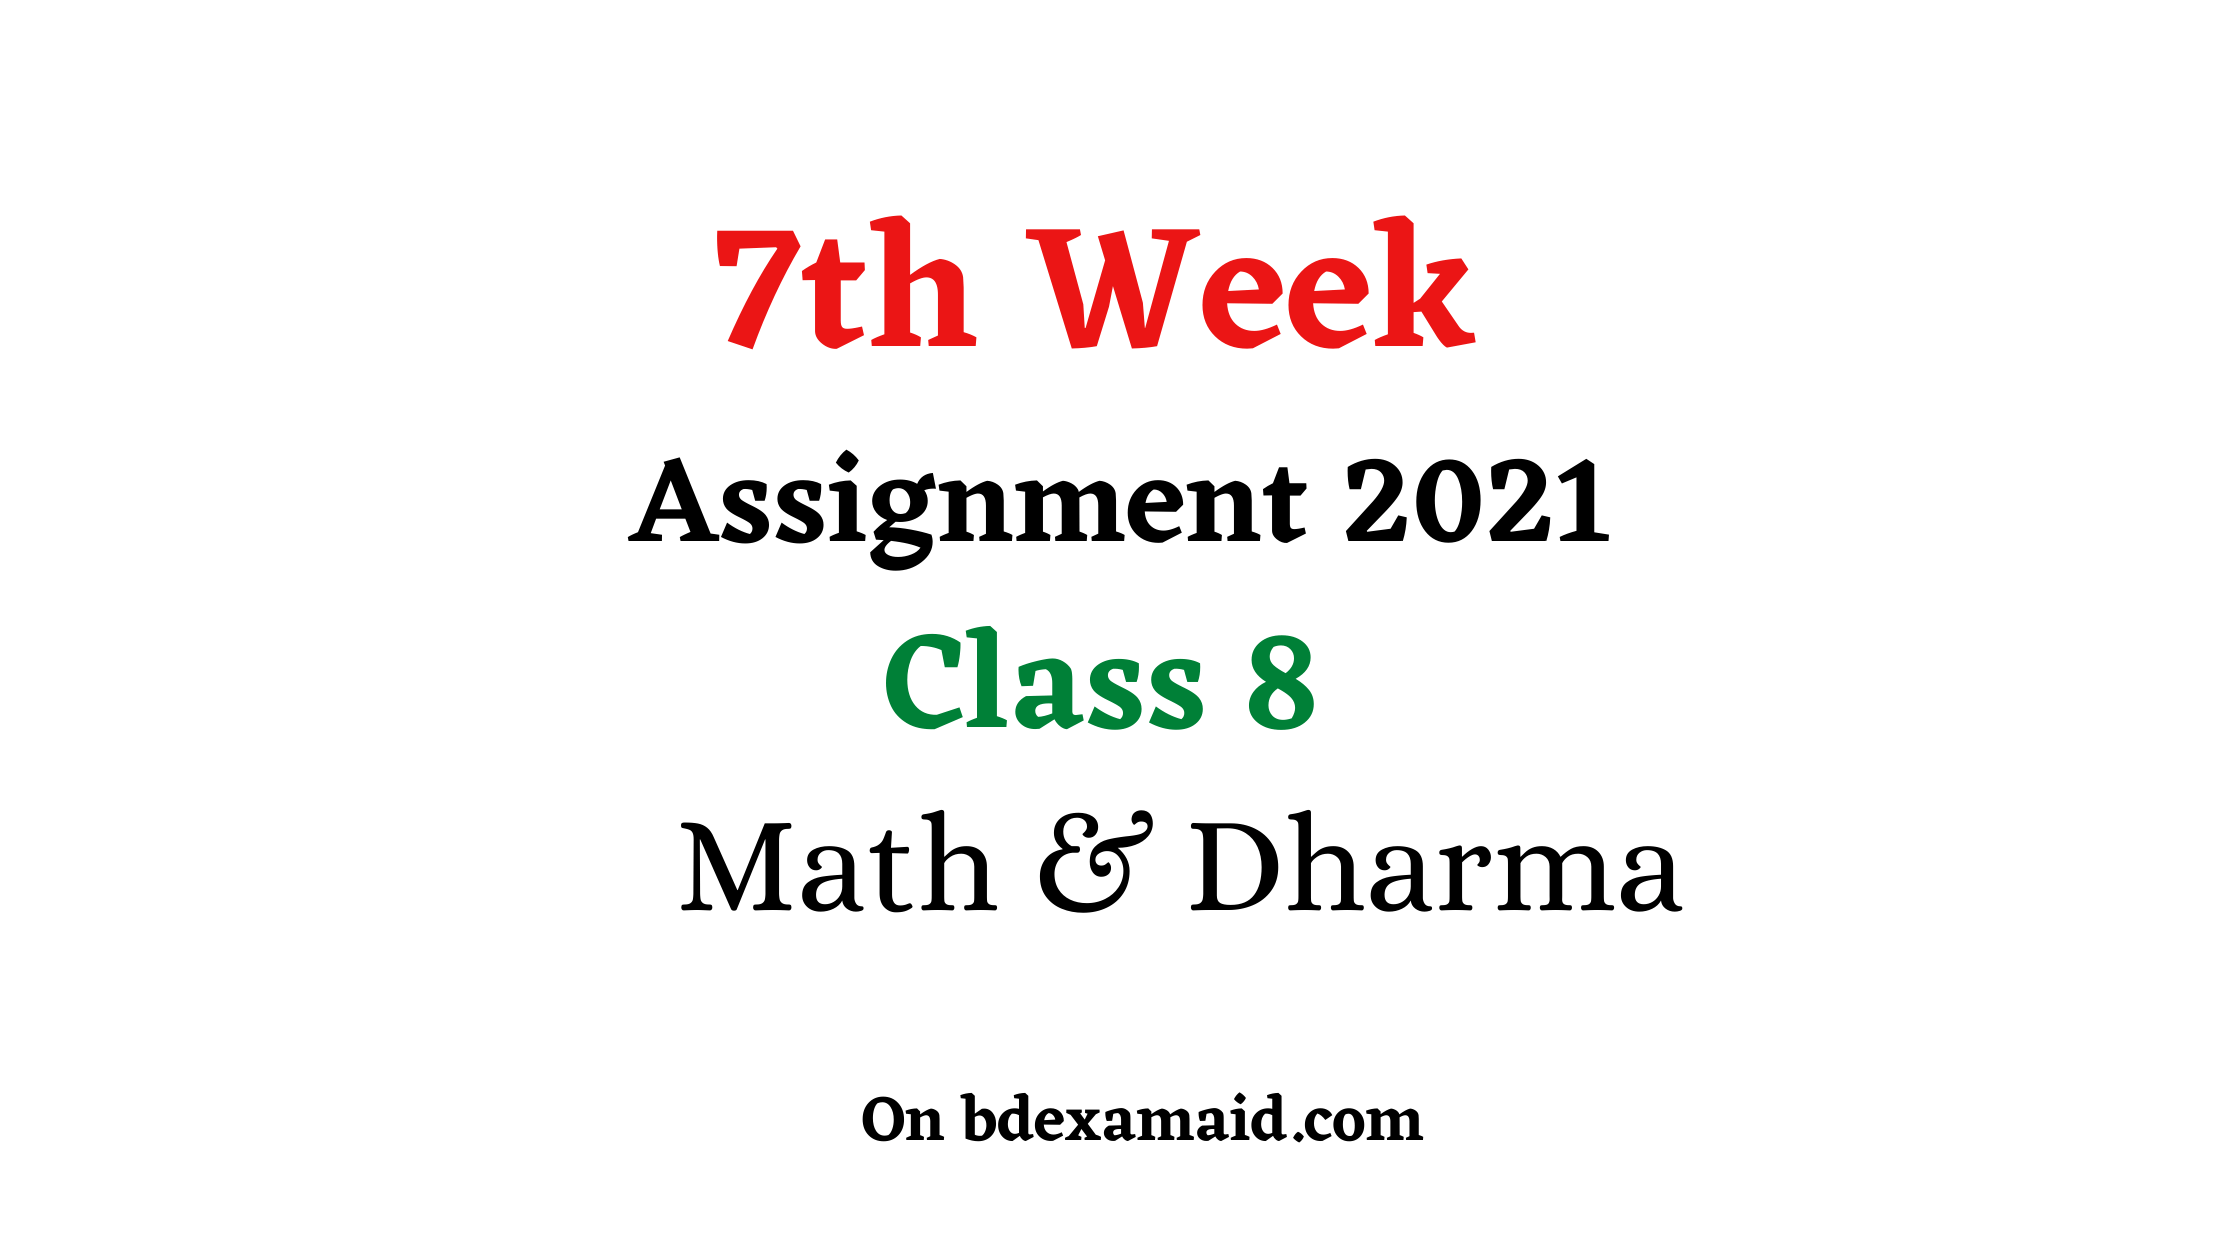 class 8 7th week